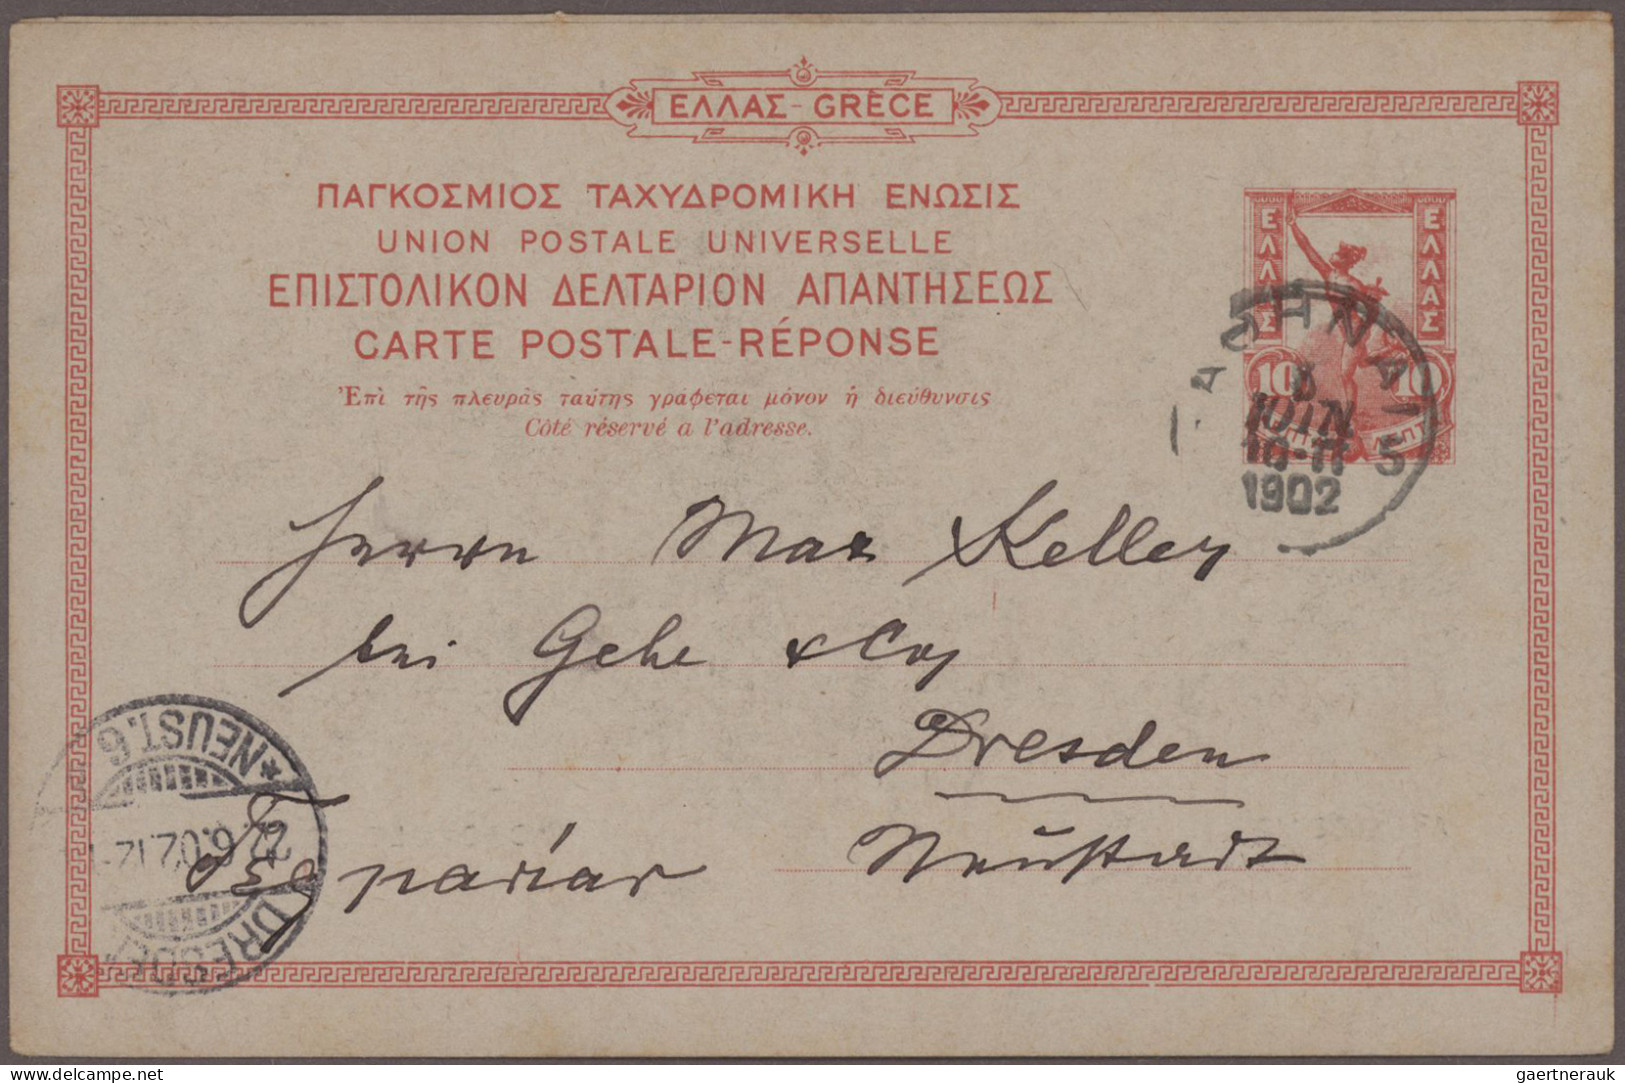 Greece - postal stationery: 1900/1941 Postal stationery picture cards: Specializ